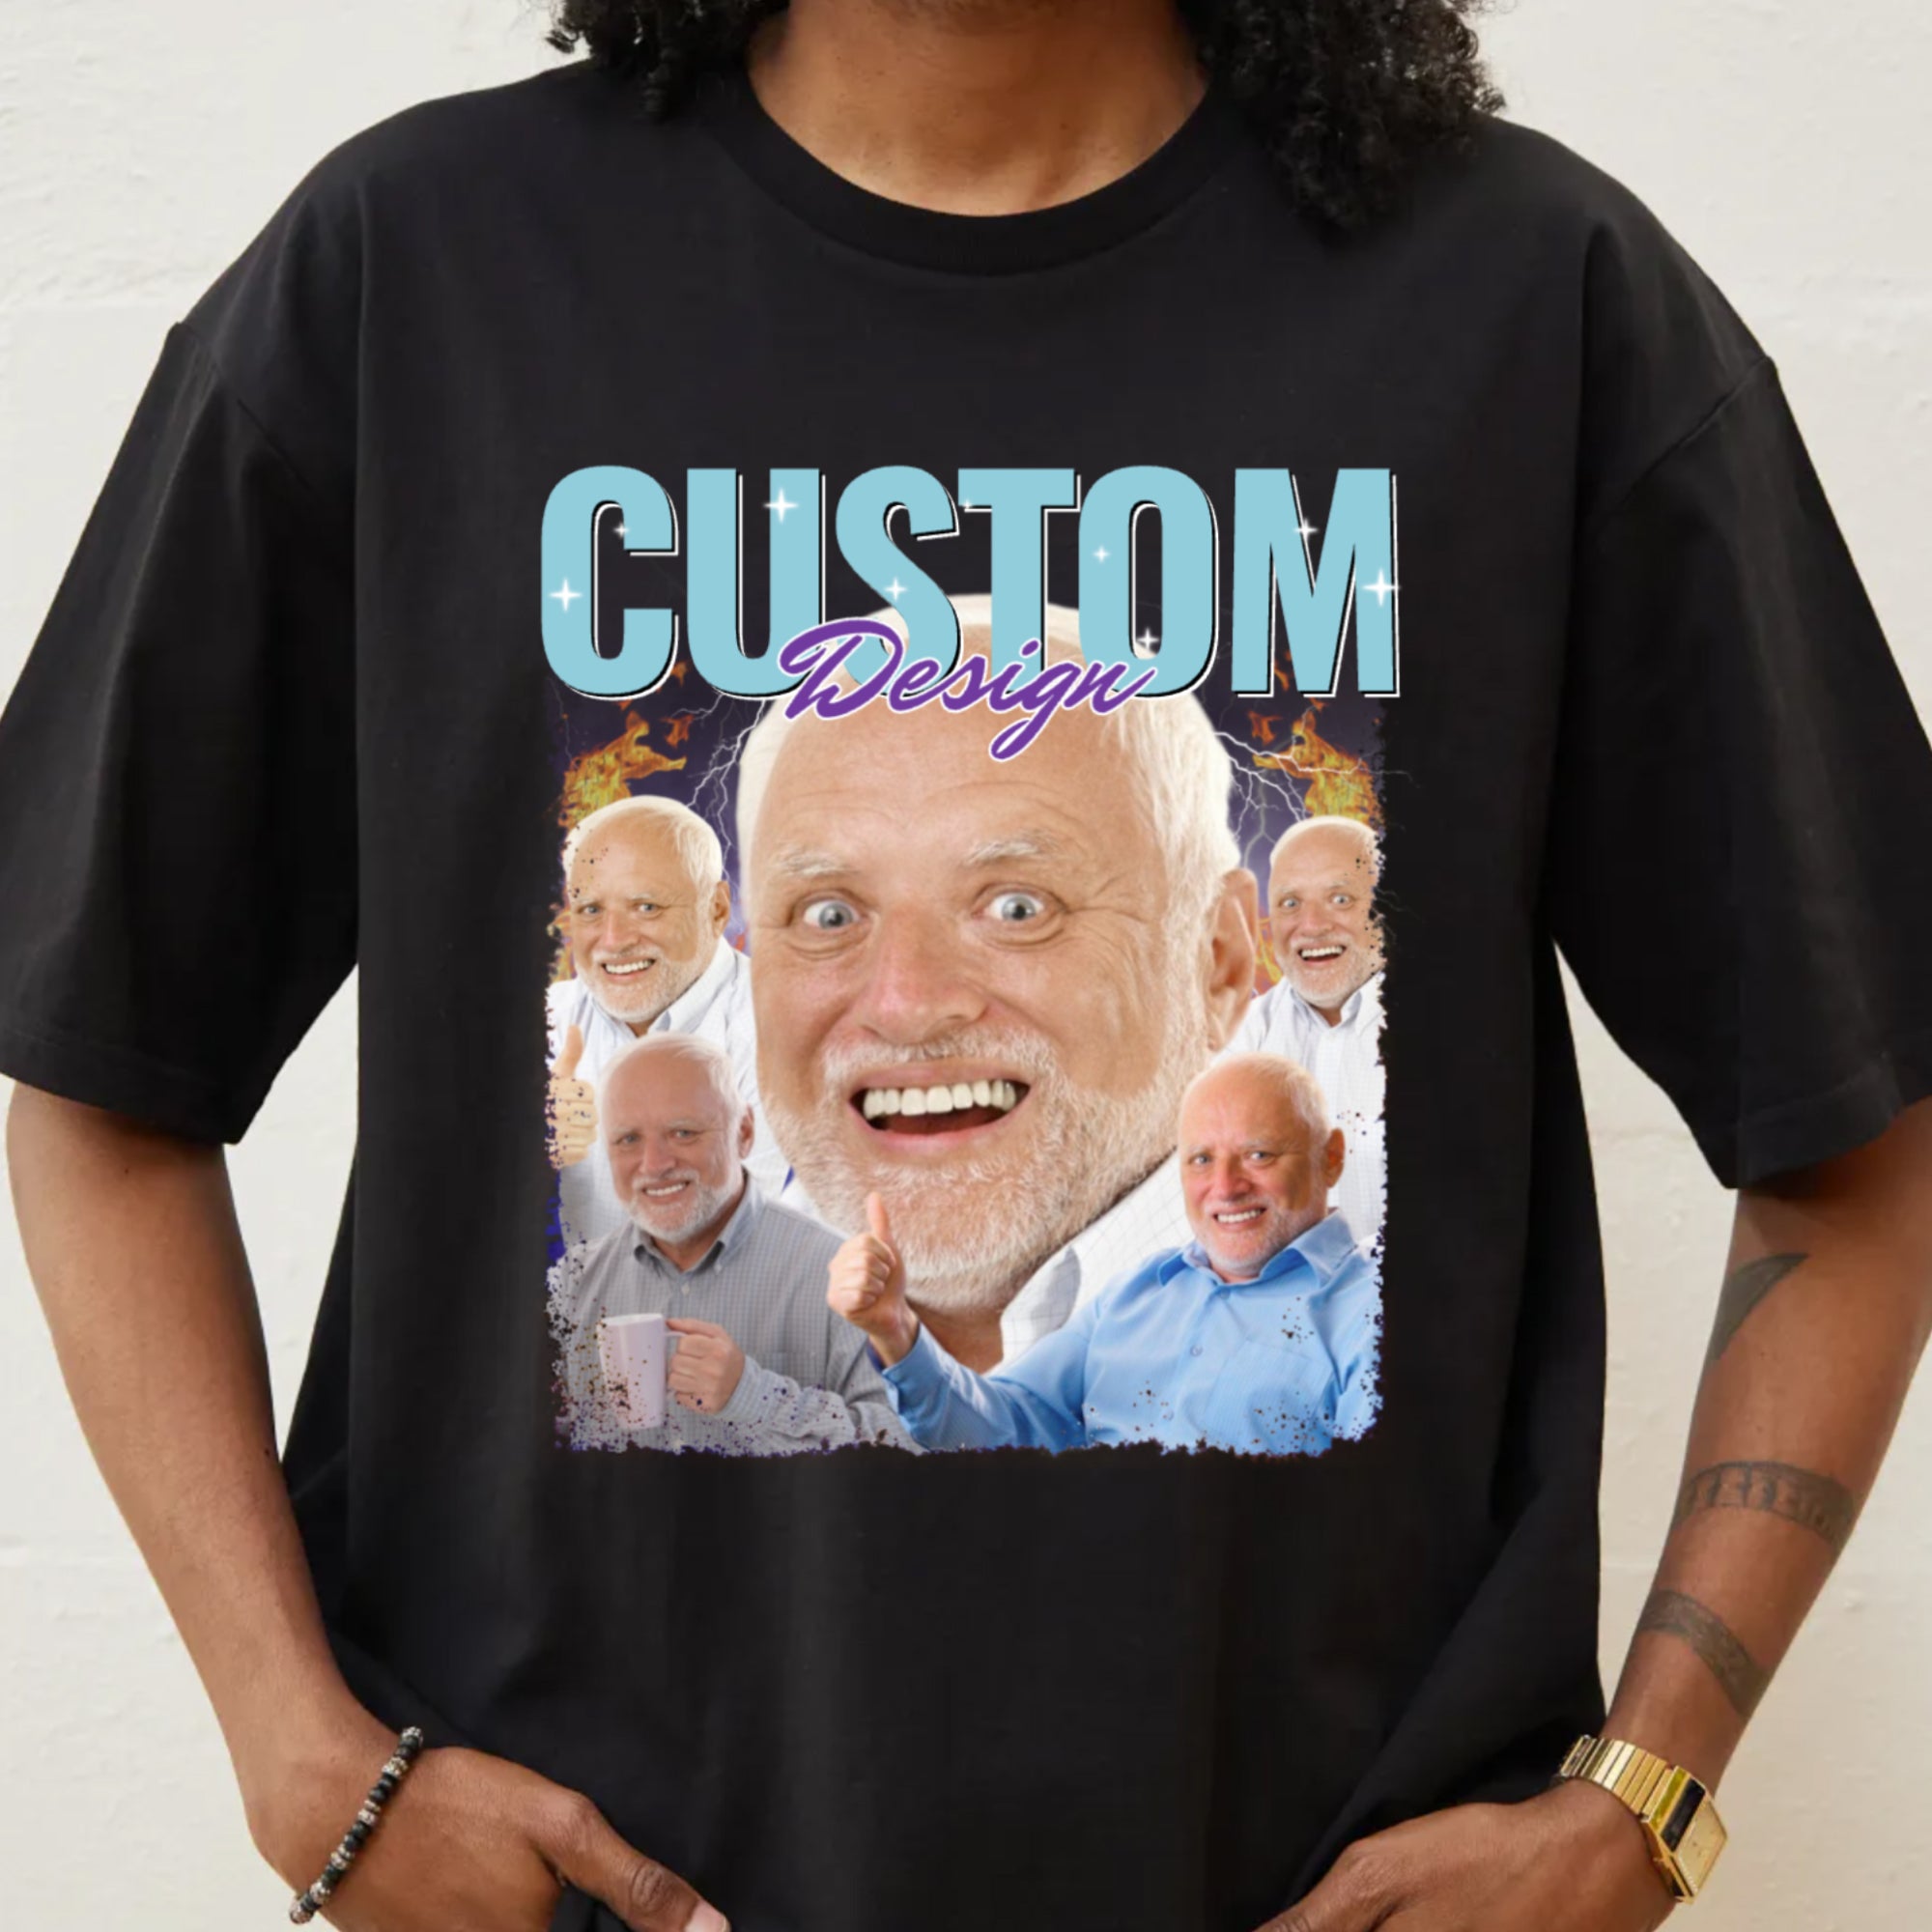 Custom T-Shirts, Create Your Own Tee NZ